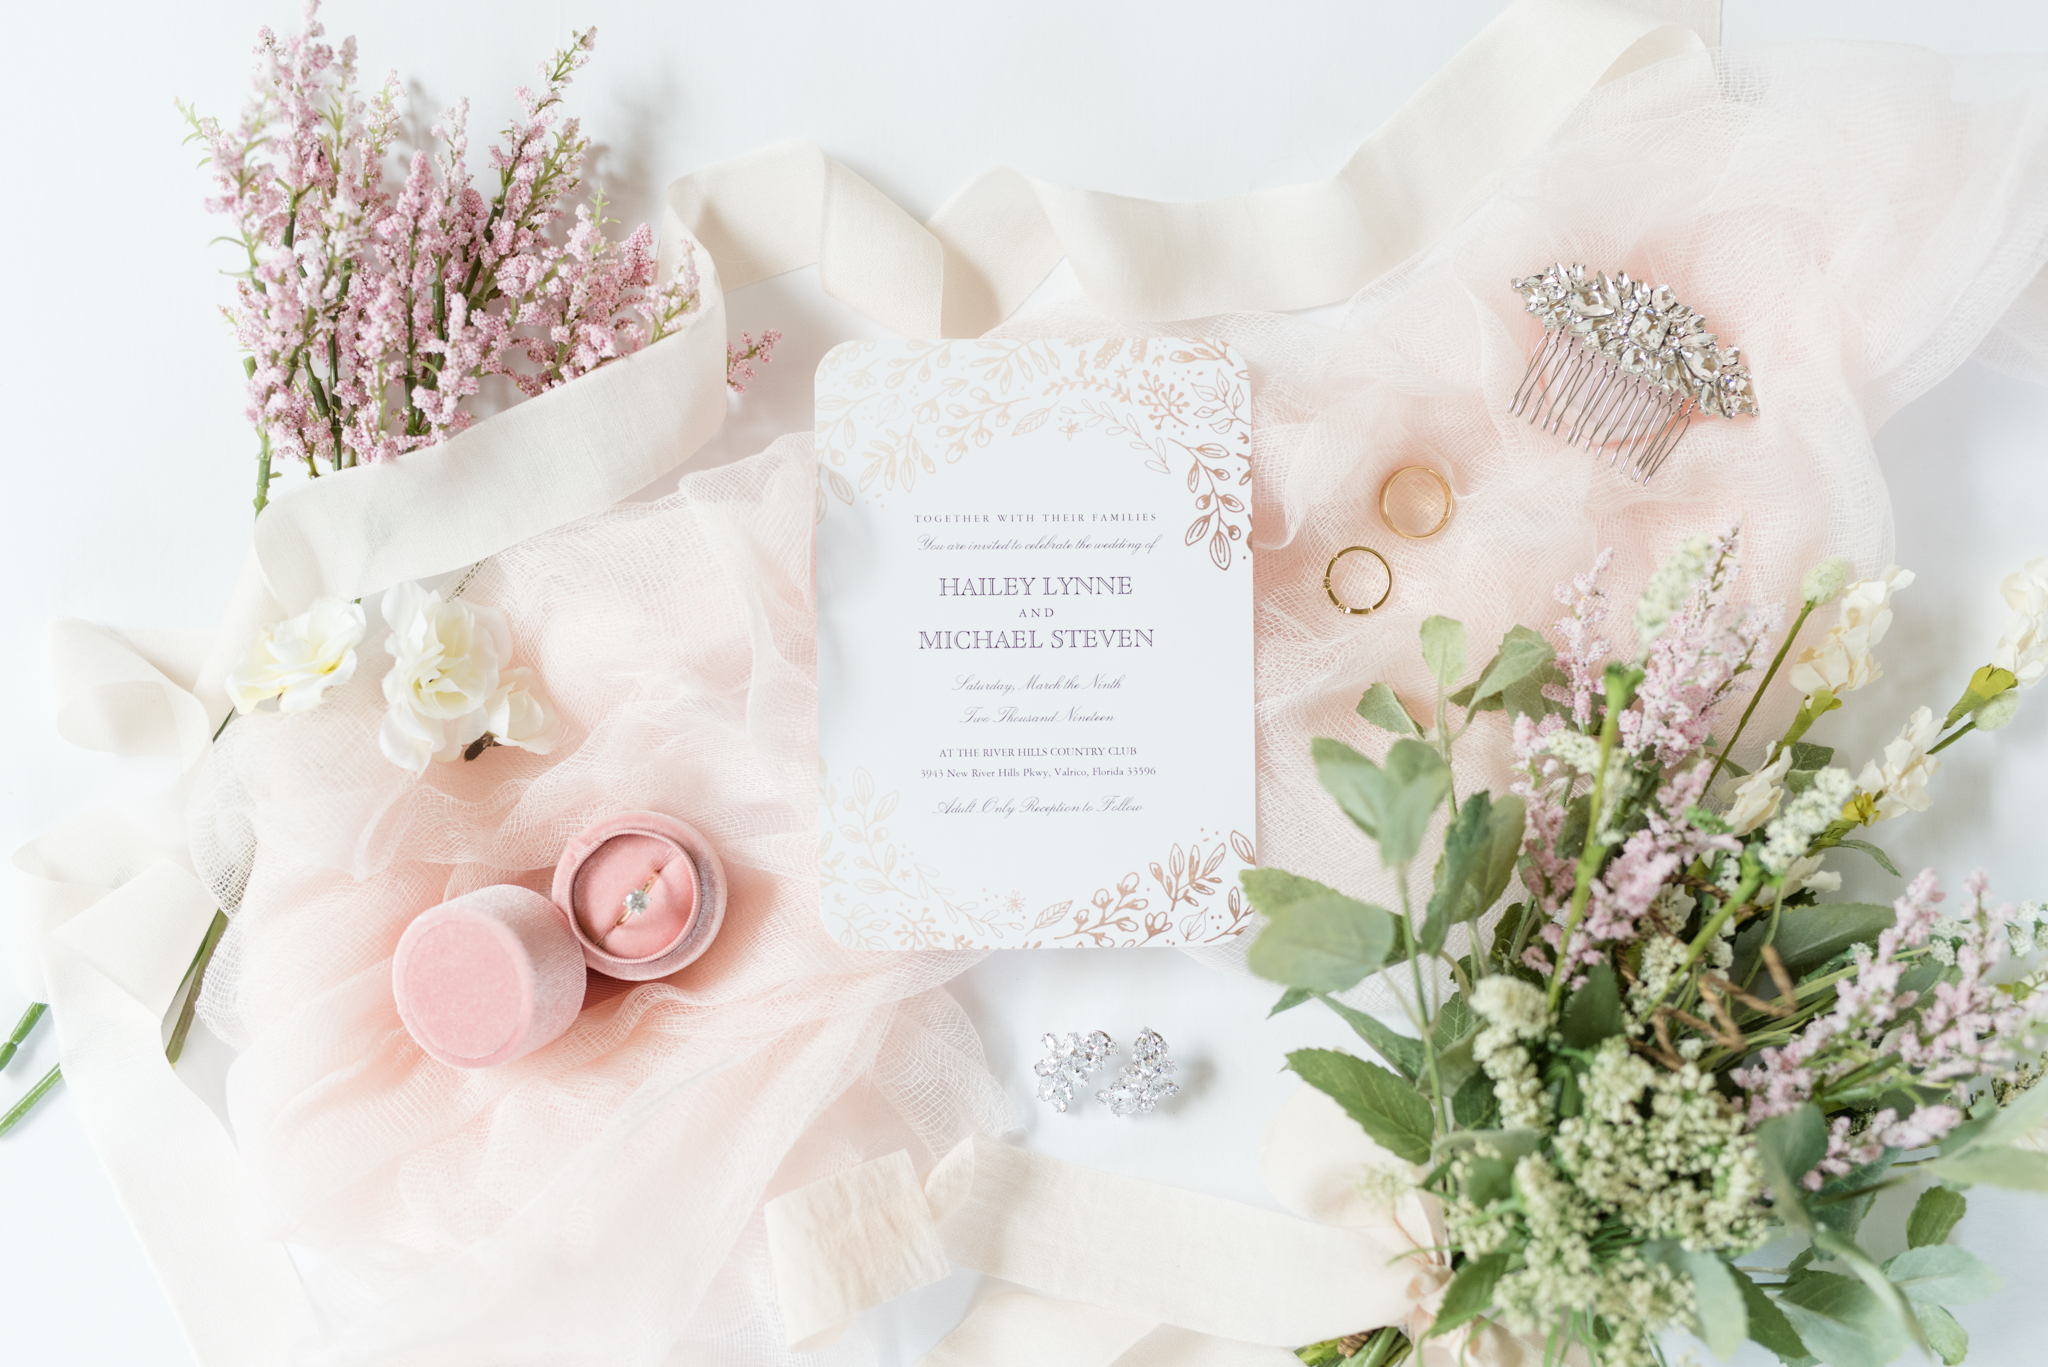 Wedding details and floral arrangements.